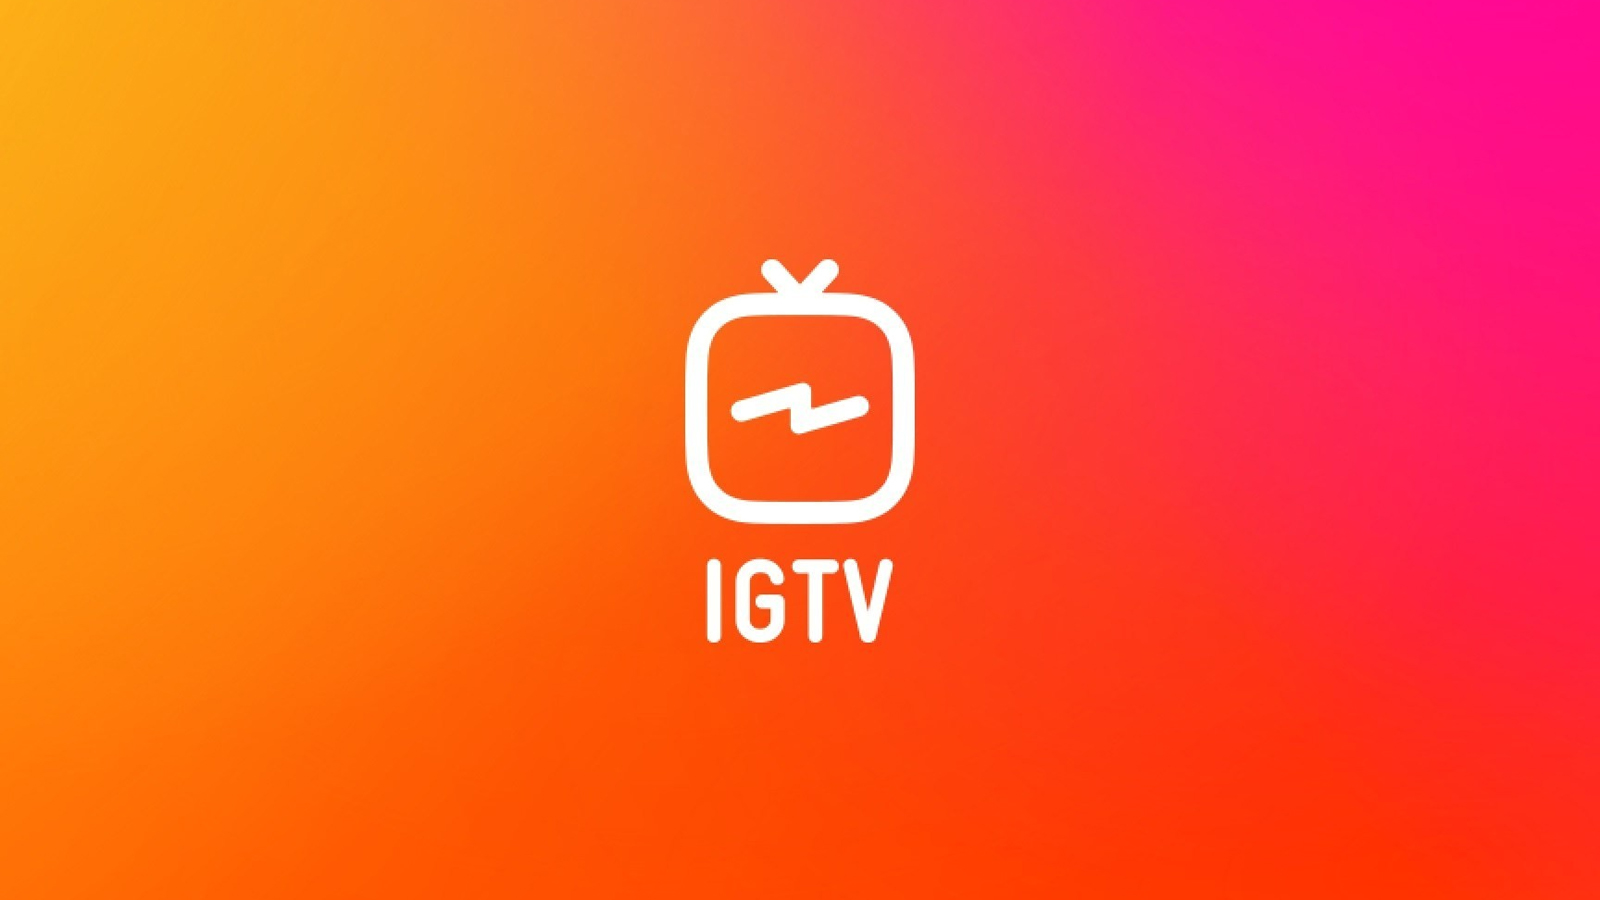 Instagram annonce qu'il va arrêter de supporter son application IGTV